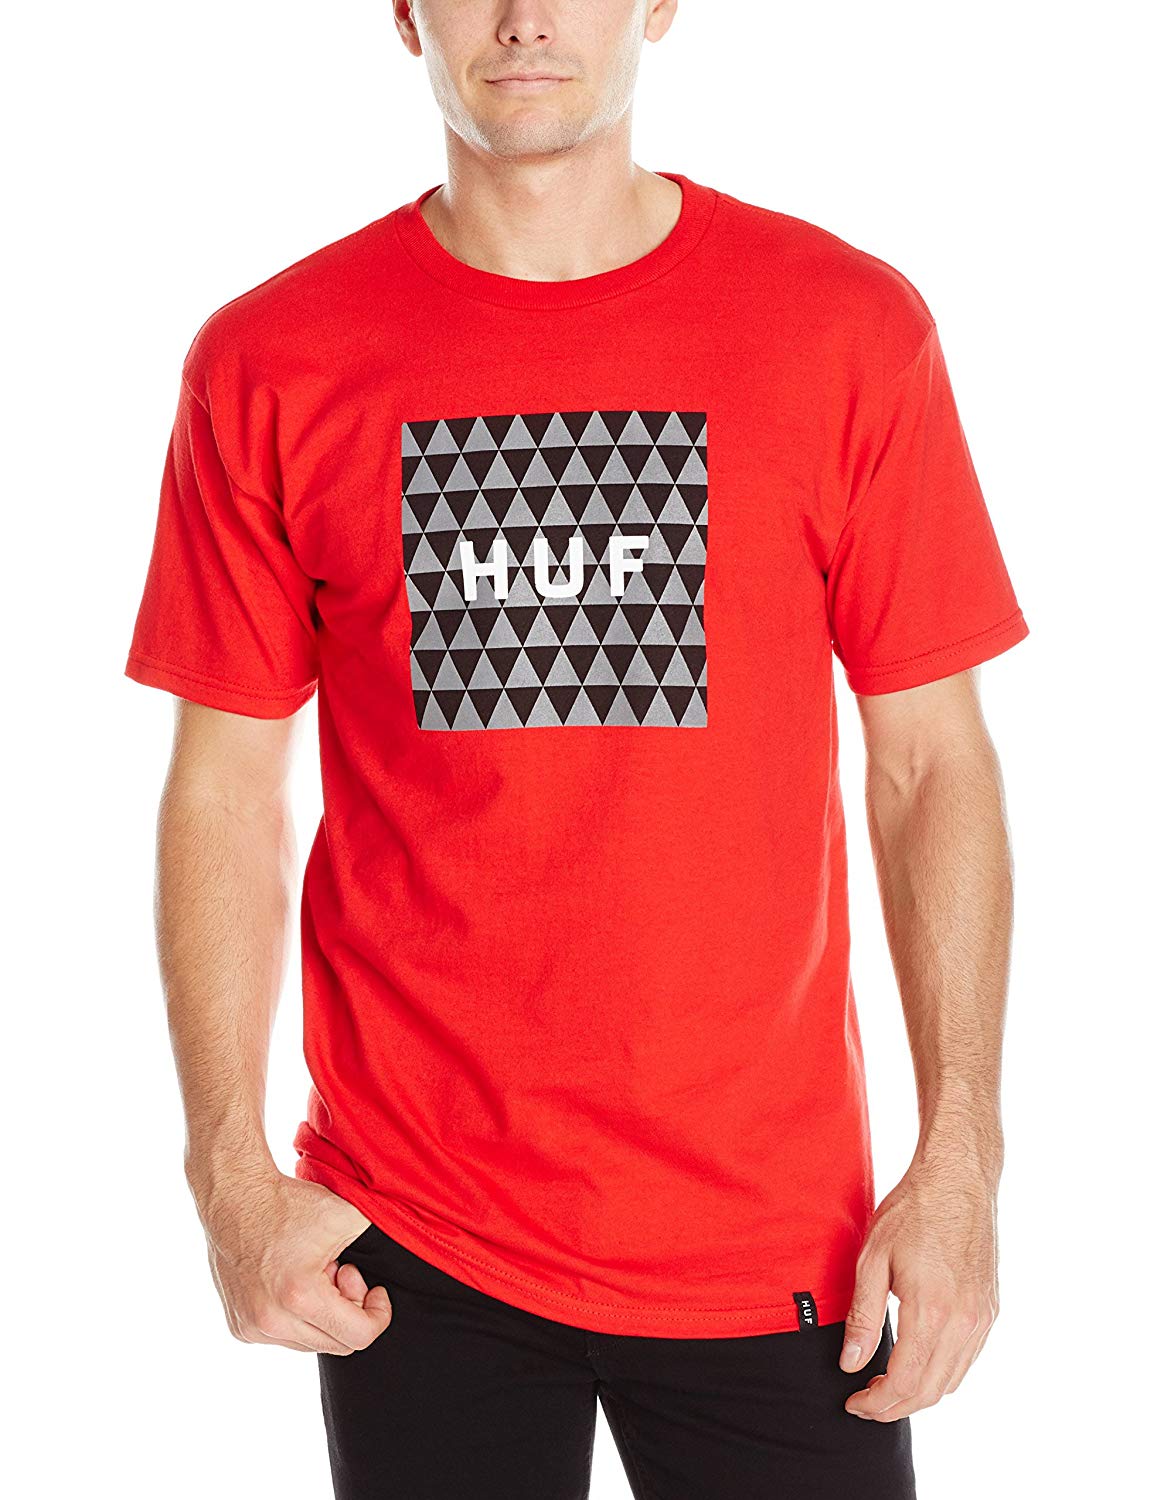 Red Triangle Box Logo - Amazon.com: HUF Men's Triangle Box Logo T-Shirt: Clothing